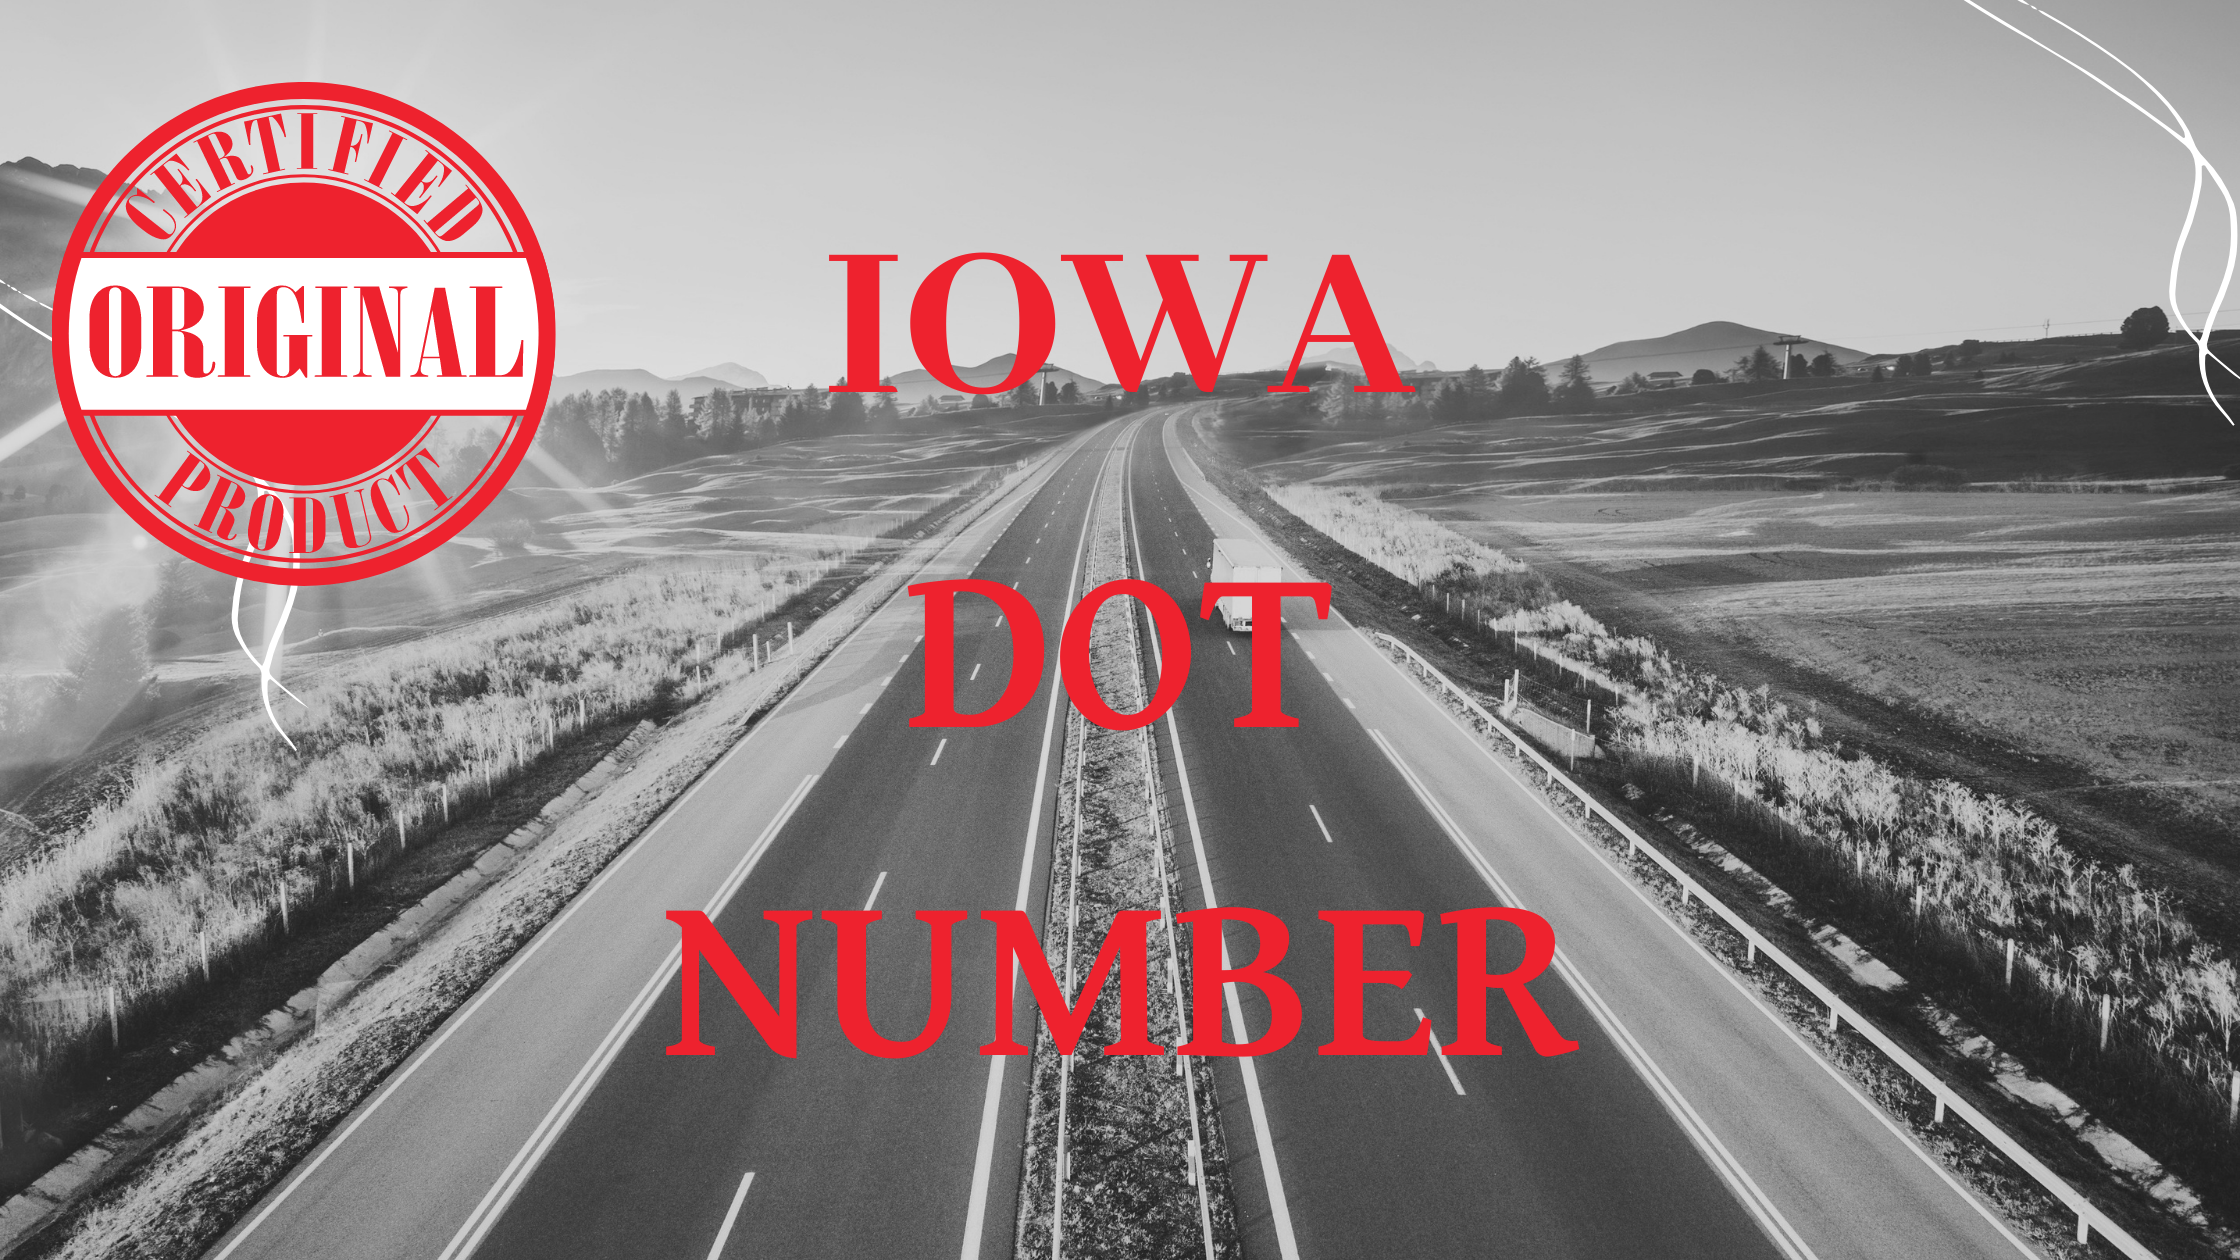 Iowa DOT Number